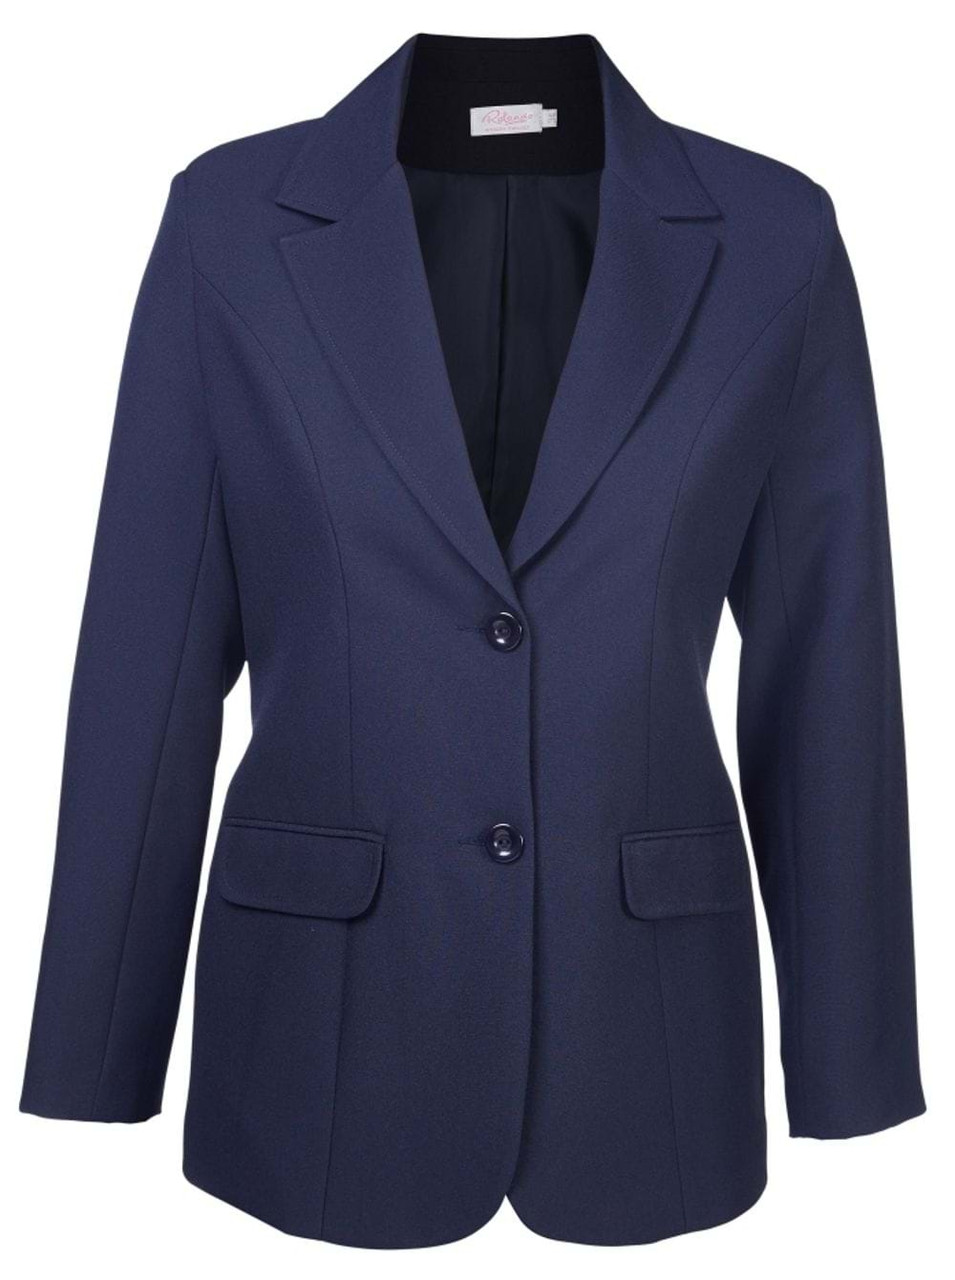 Shop for Formal & Evening | Coats & Jackets | Womens | online at bonprix